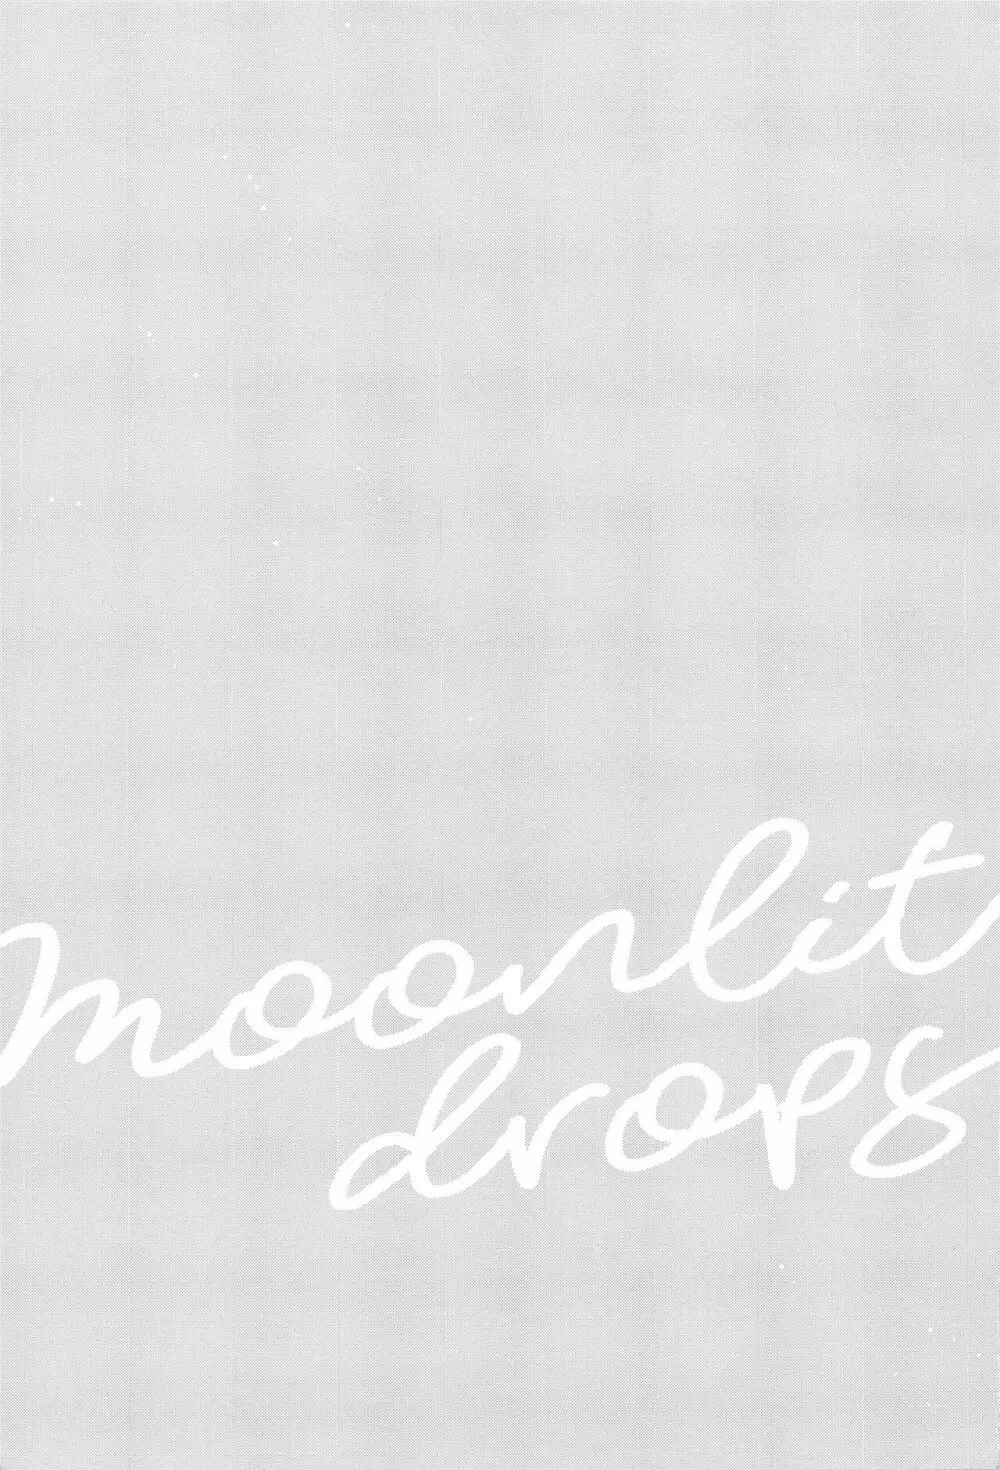 Moonlit drops - page58